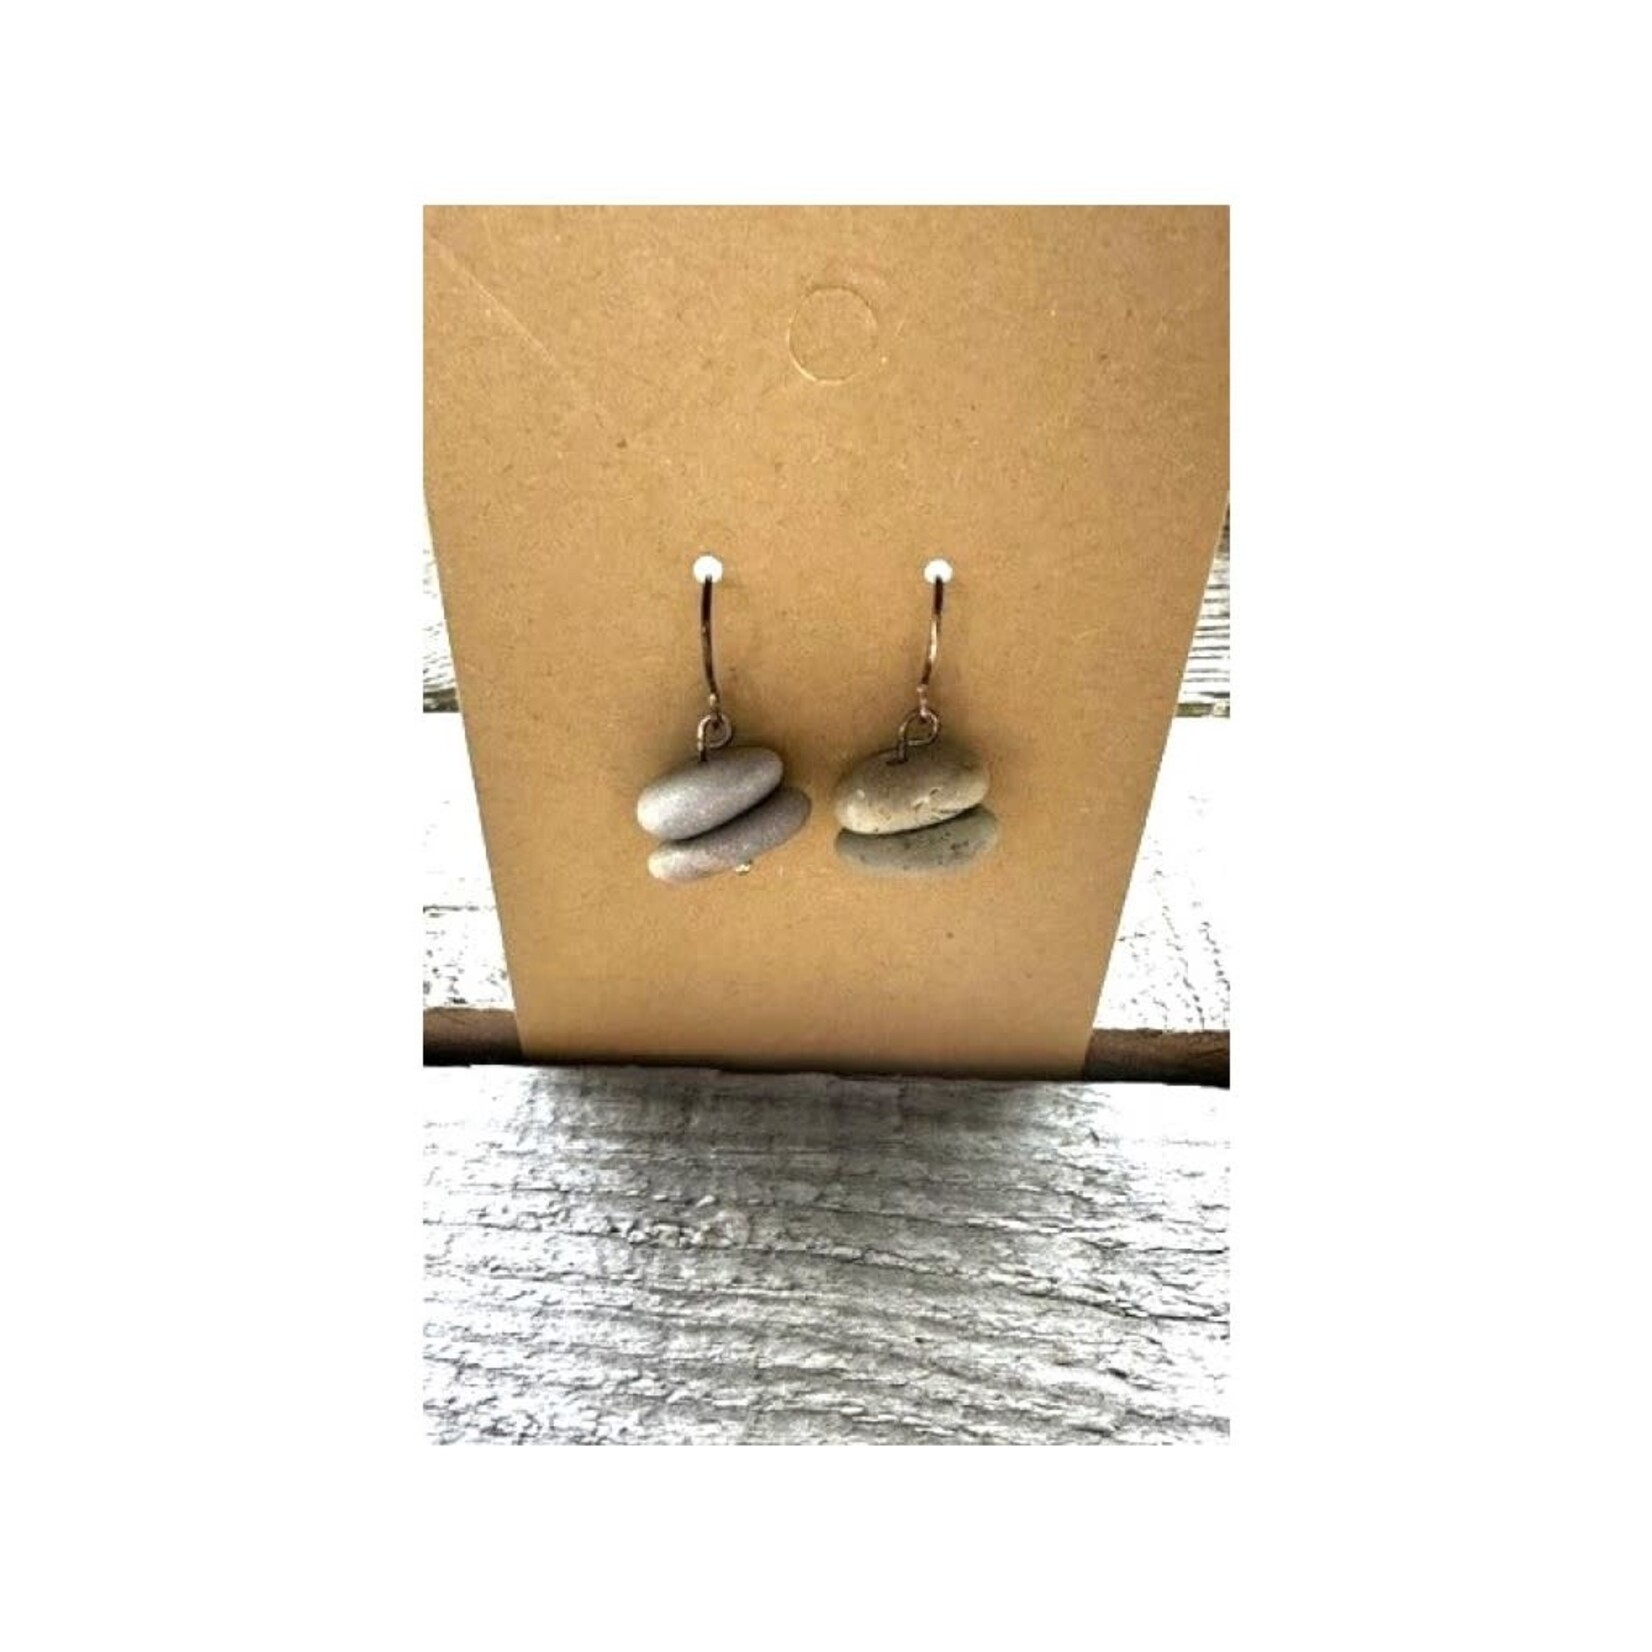 French Hook Earrings - Stone Cairn 20